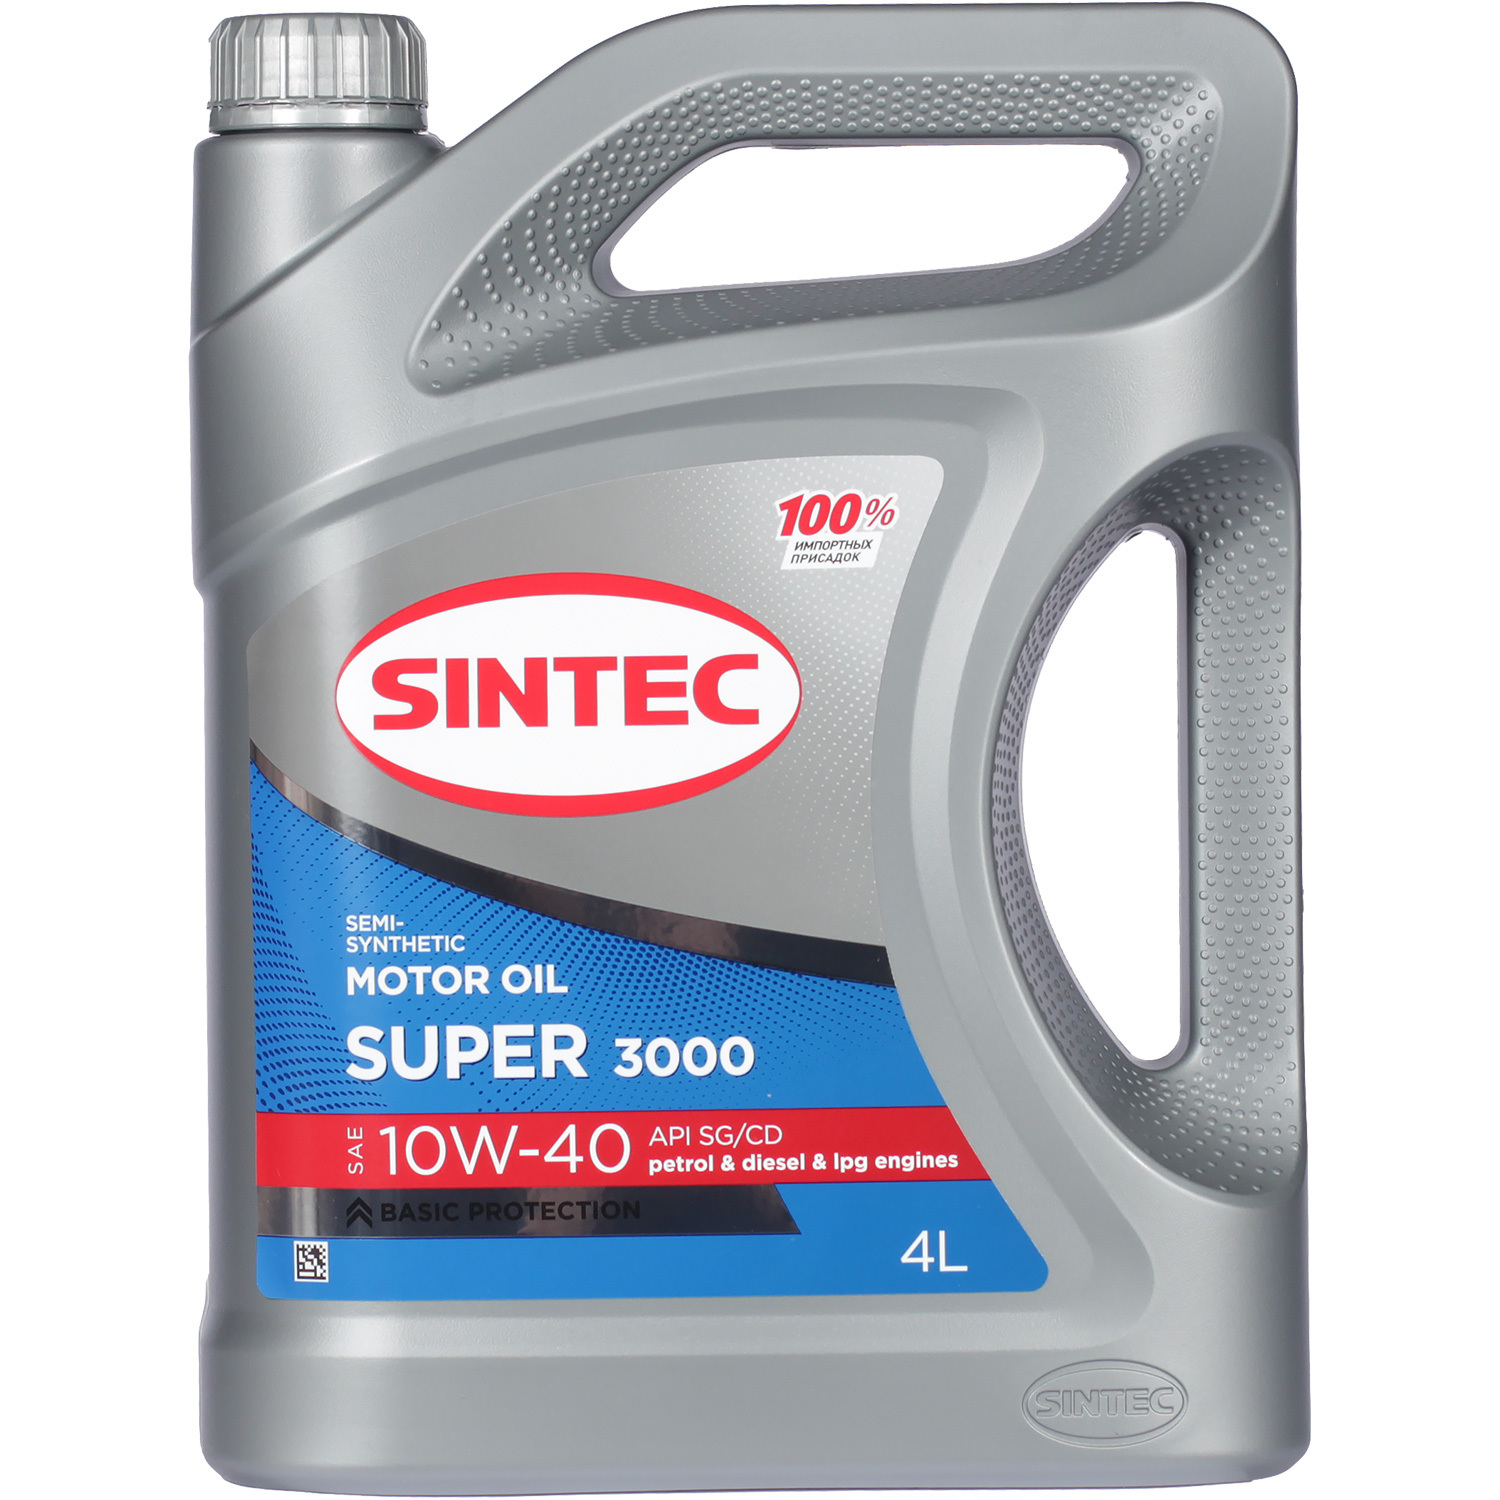 Sintec Моторное масло Sintec Super 3000 10W-40, 4 л sintec моторное масло sintec super 3000 10w 40 4 л